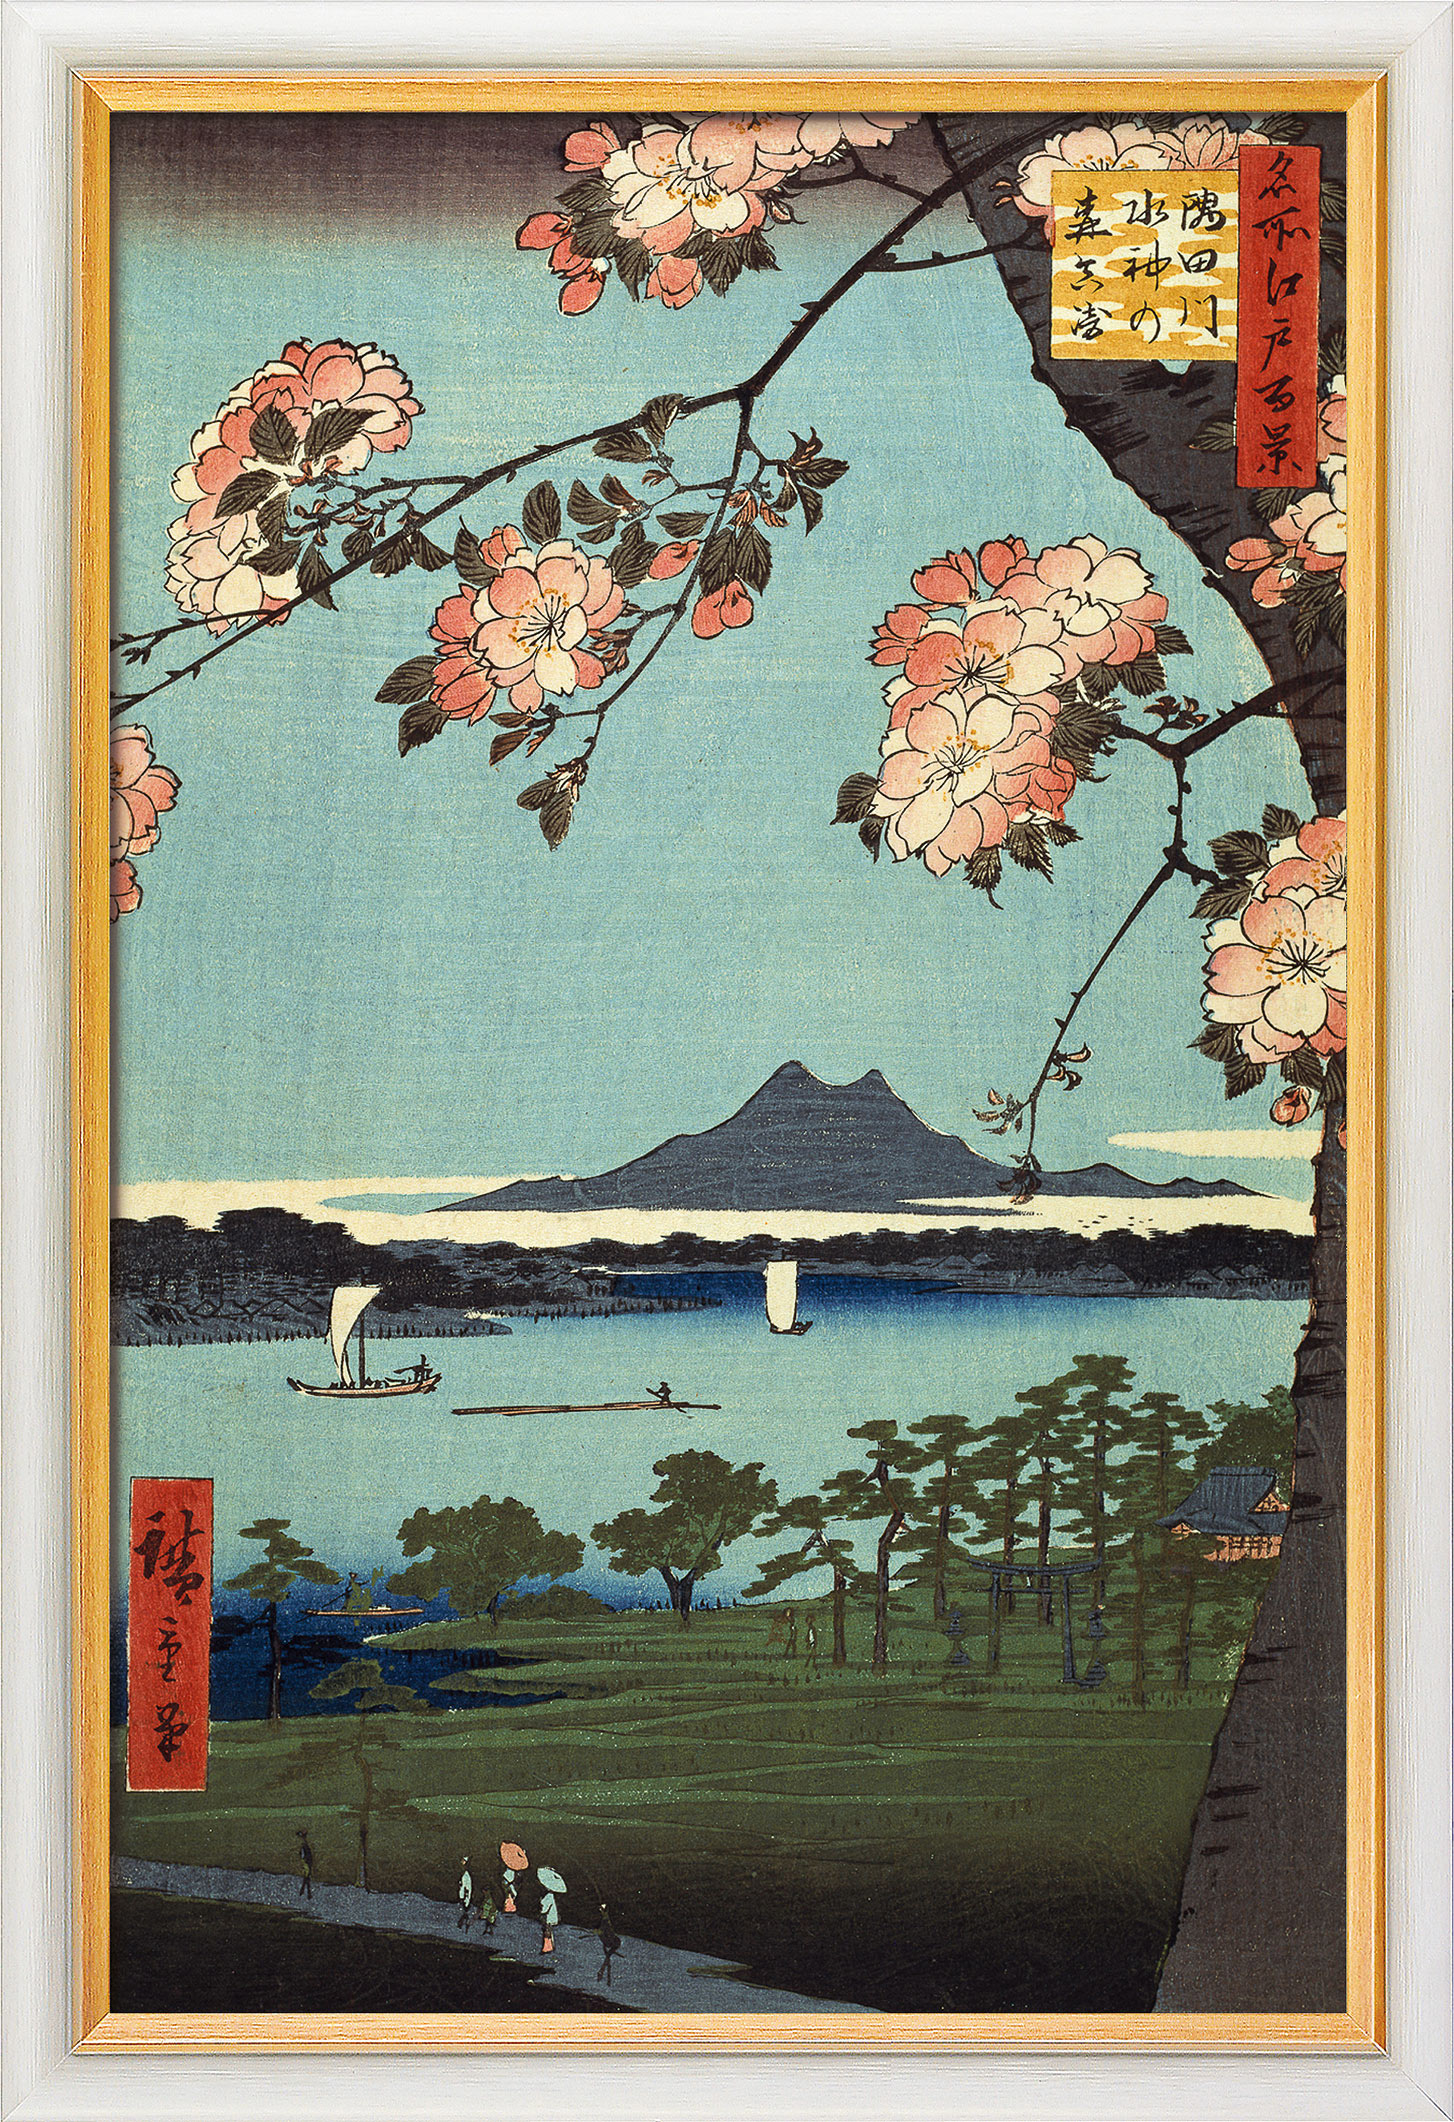 Bild "Suijin Grove and Masaki" (1856-58), gerahmt von Ando Hiroshige